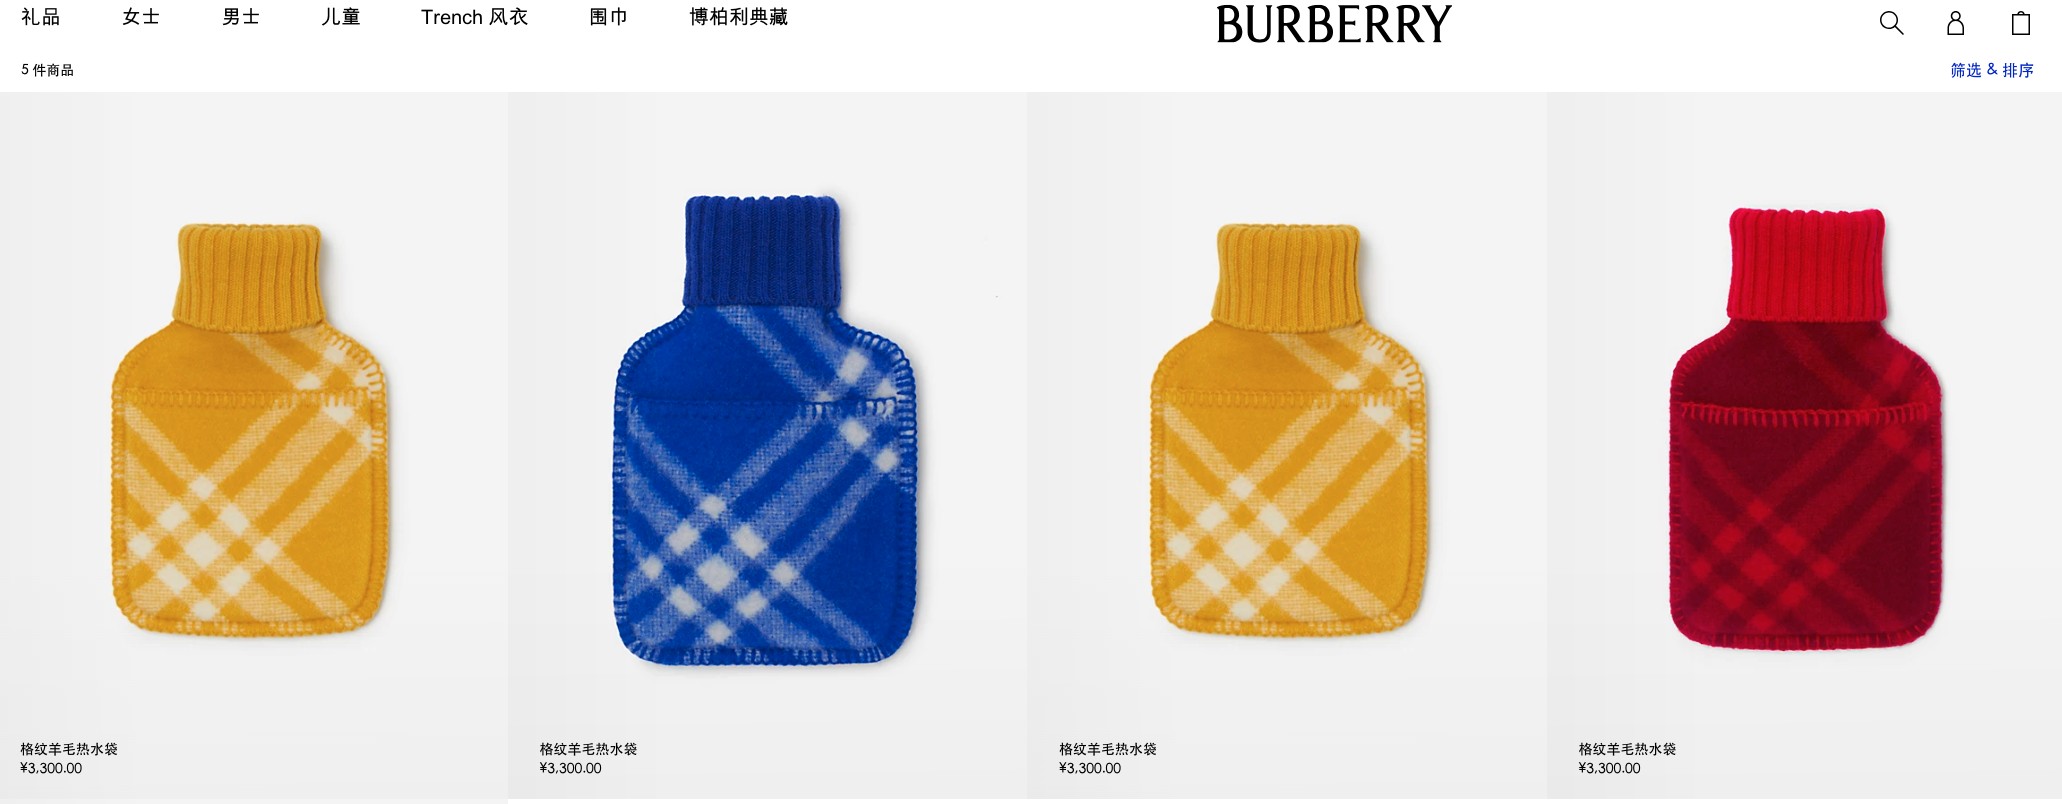 Burberry中国开卖3300元热水袋；麦当劳中国联合VERDY搞事情；三得利威士忌再提价丨品牌日报